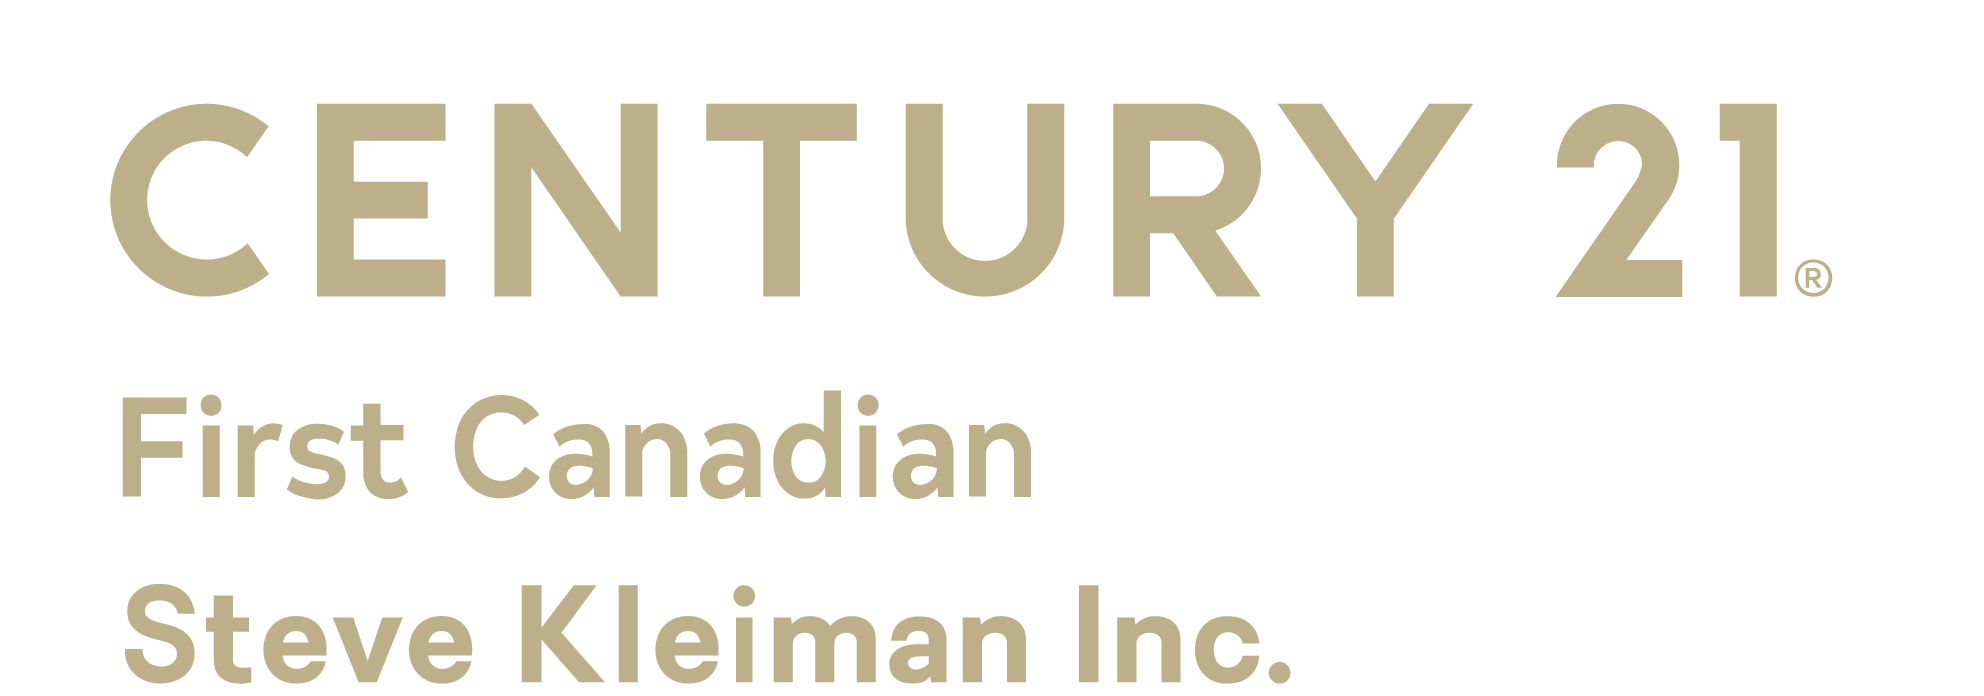 Century 21 First Canadian Steve Kleiman Inc. Logo